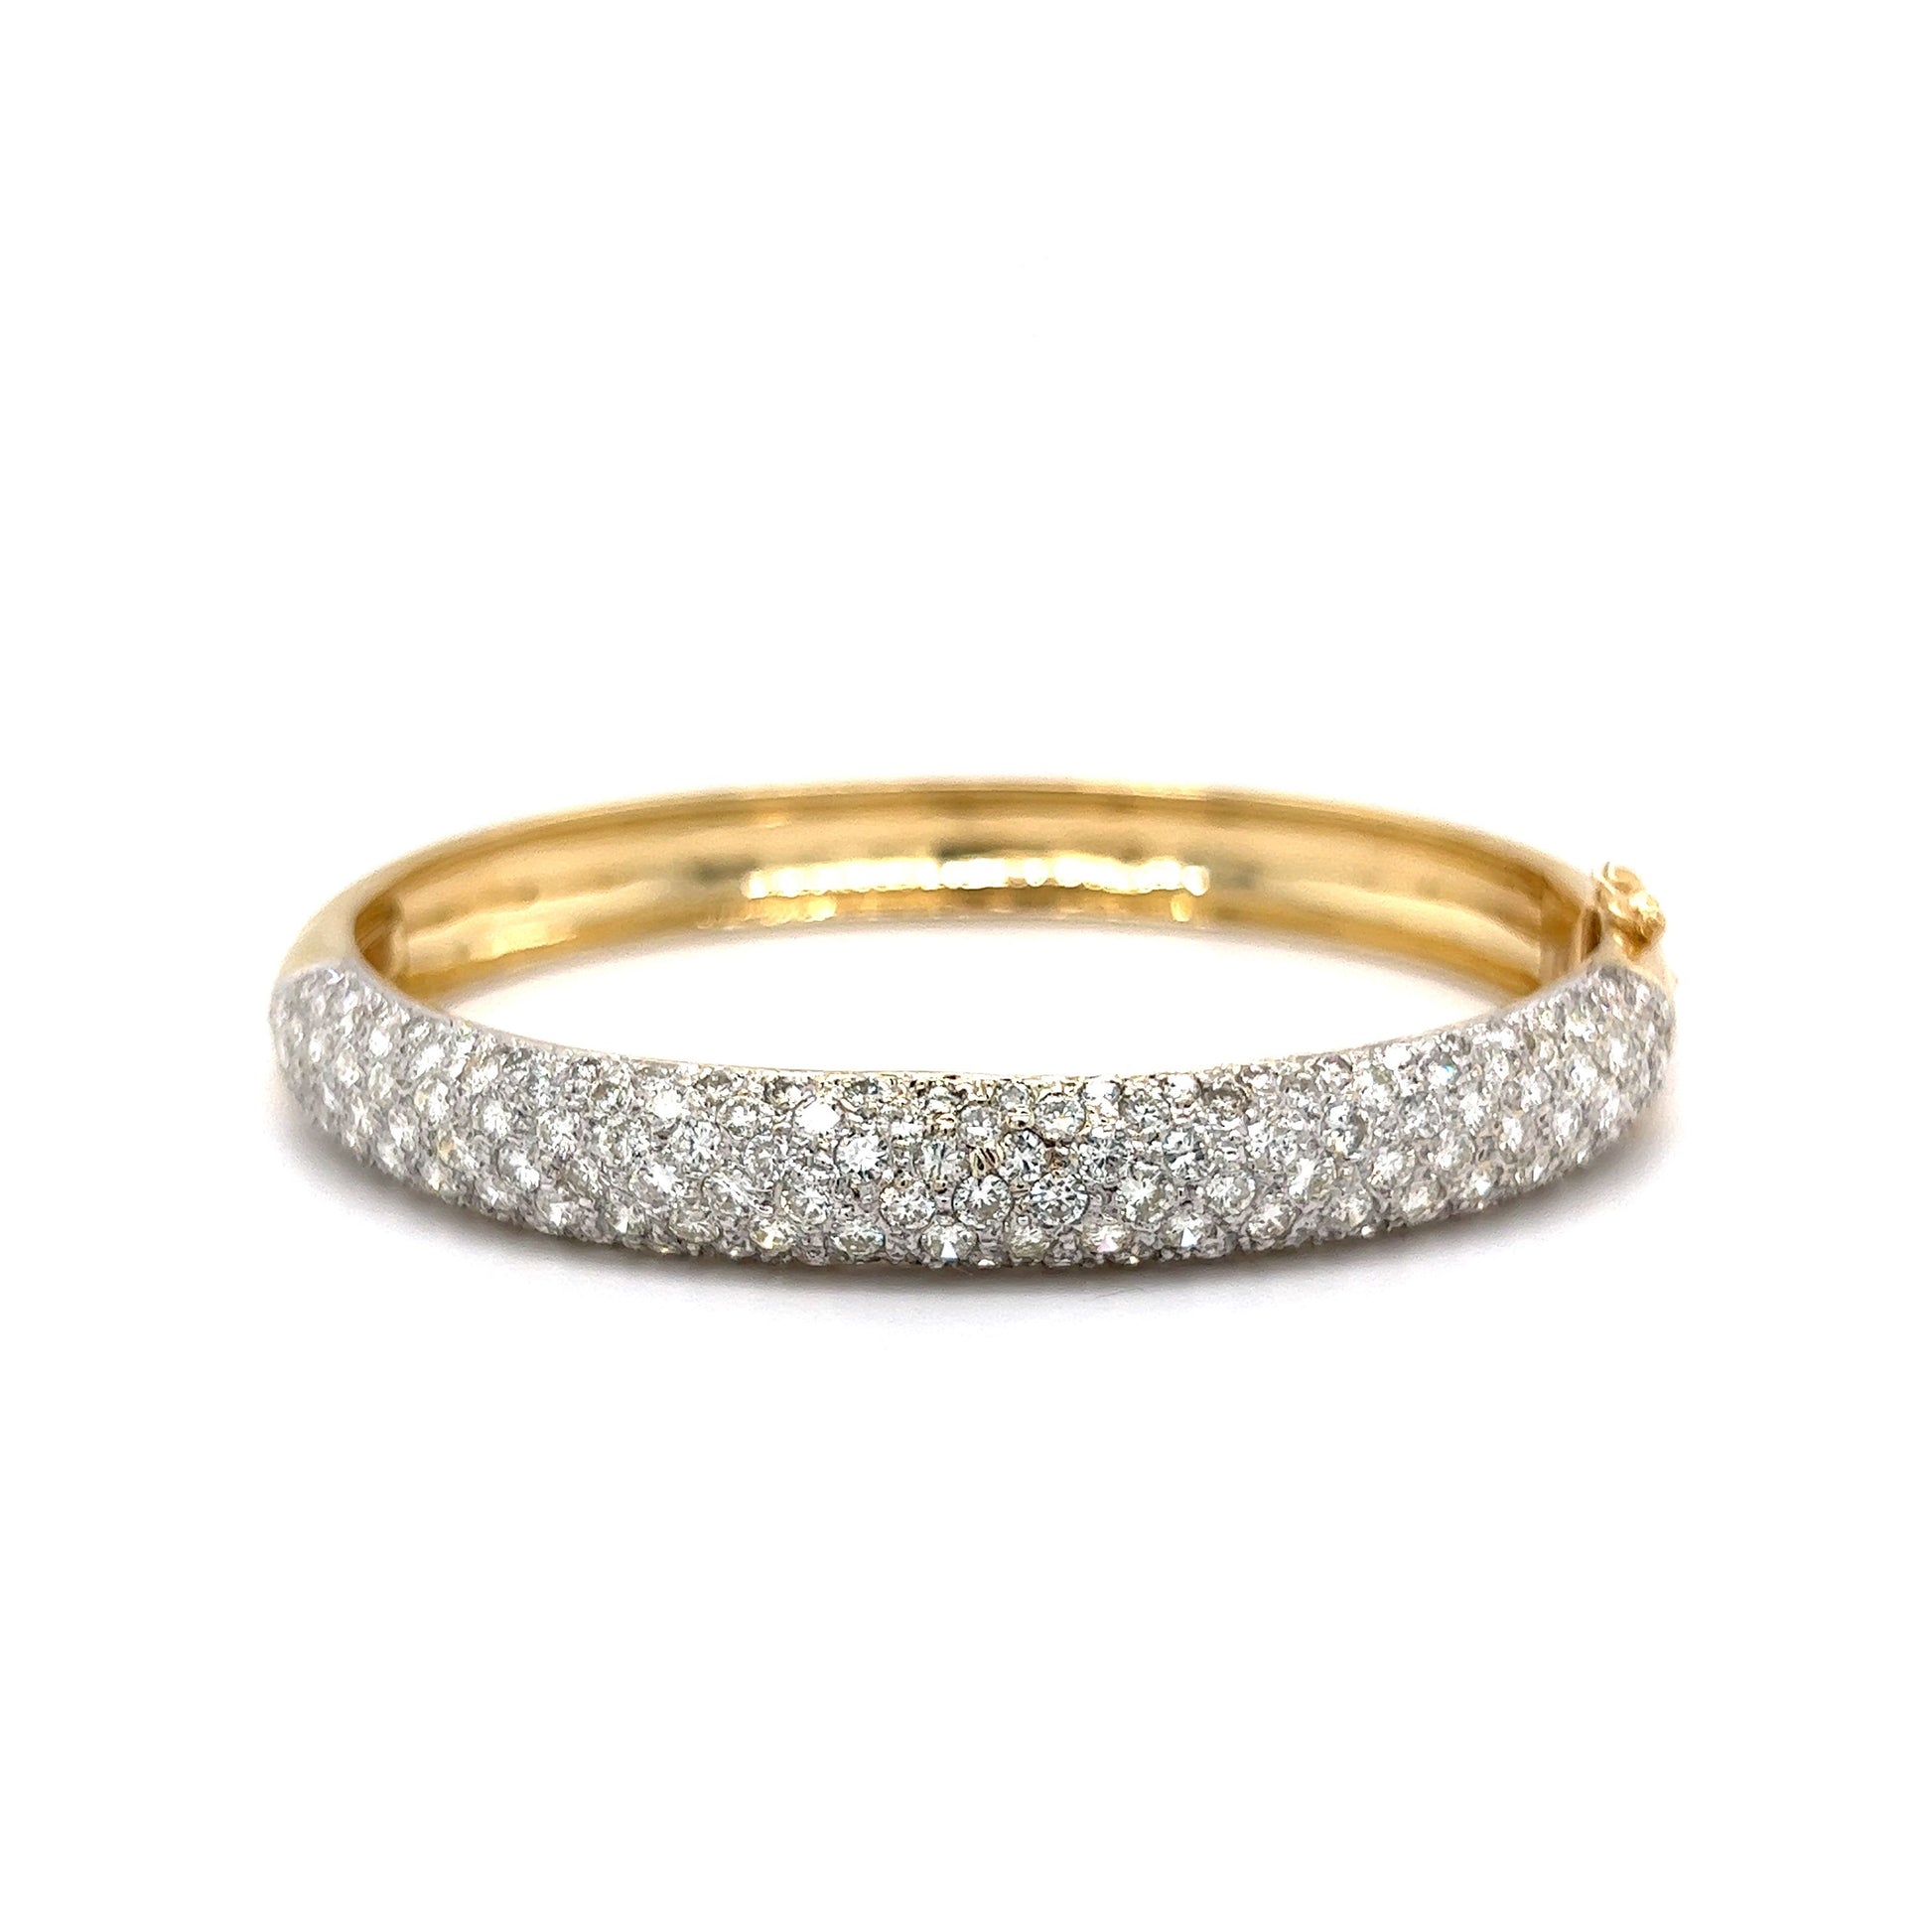 Modern Pave Diamond Bangle Bracelet in 14k Yellow Gold